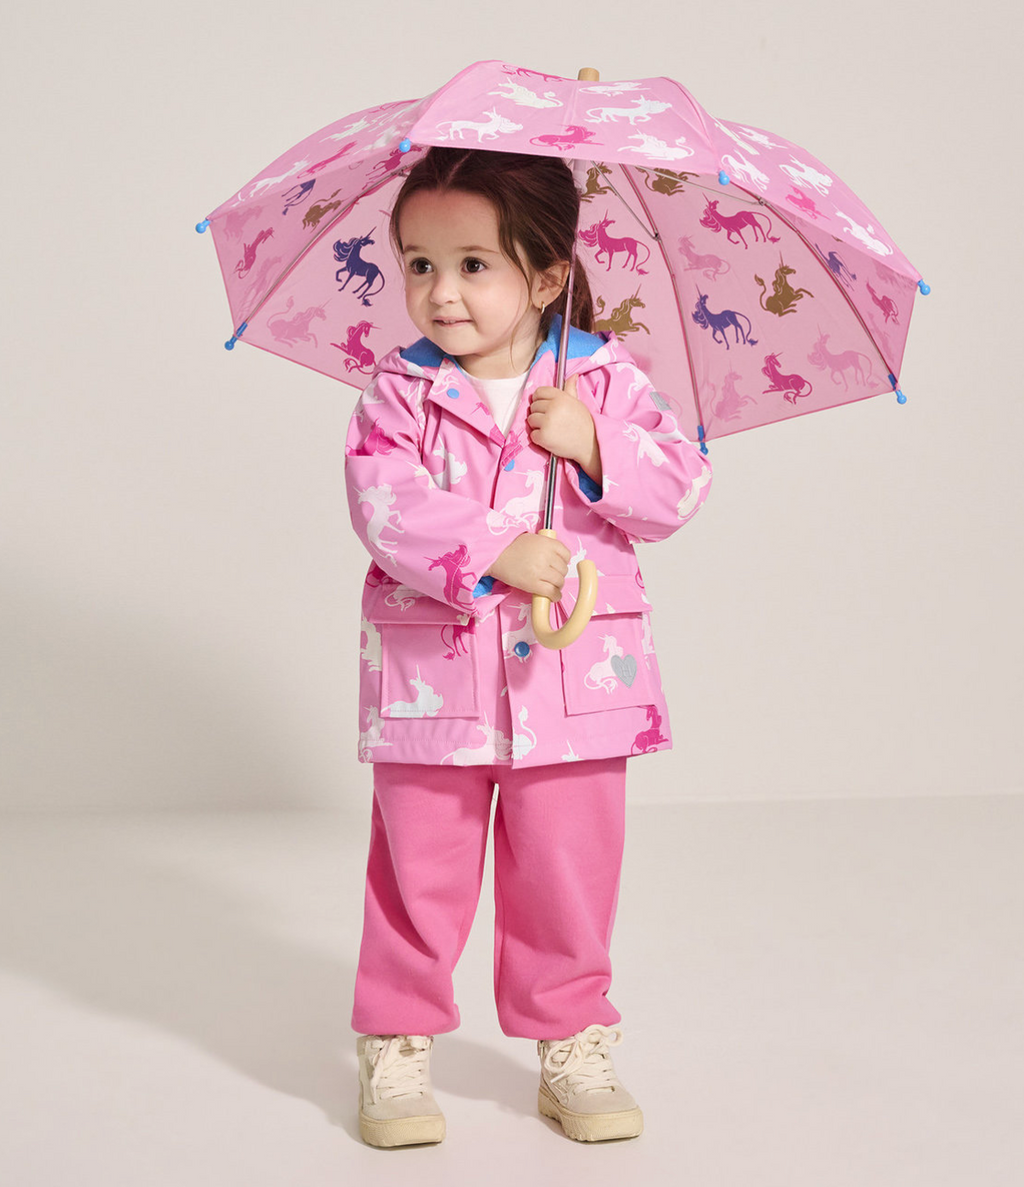 Hatley Mystical Unicorn Color Changing Children's Umbrella